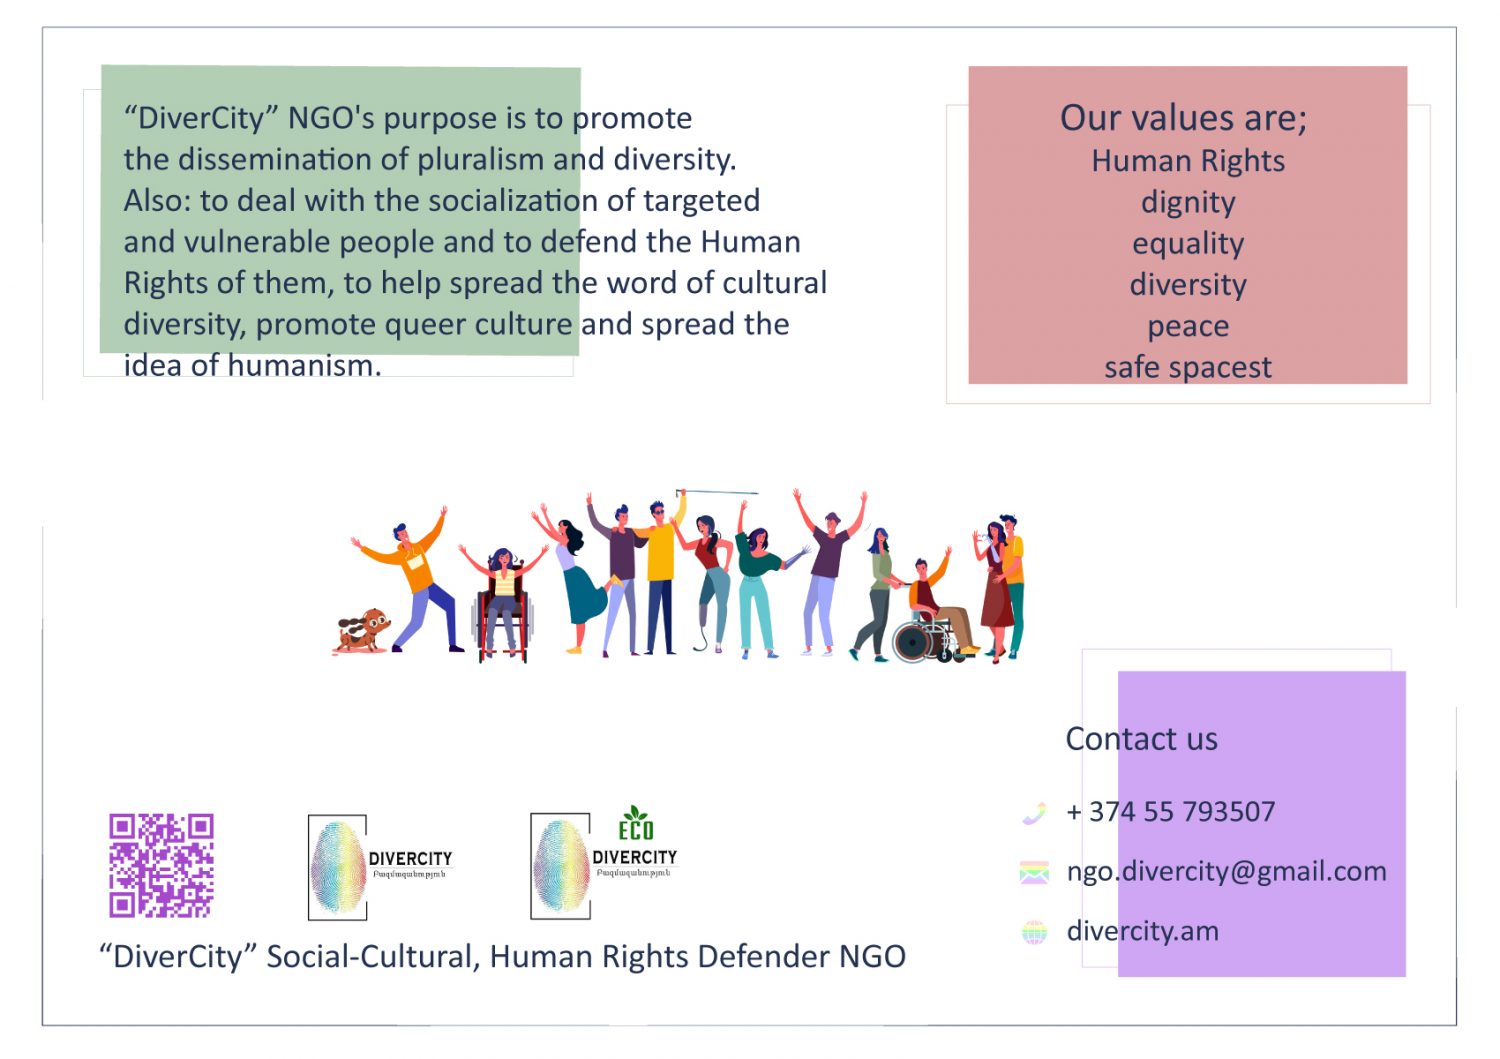 “DiverCity” Social-Cultural, Human Rights Defender NGO’s activities